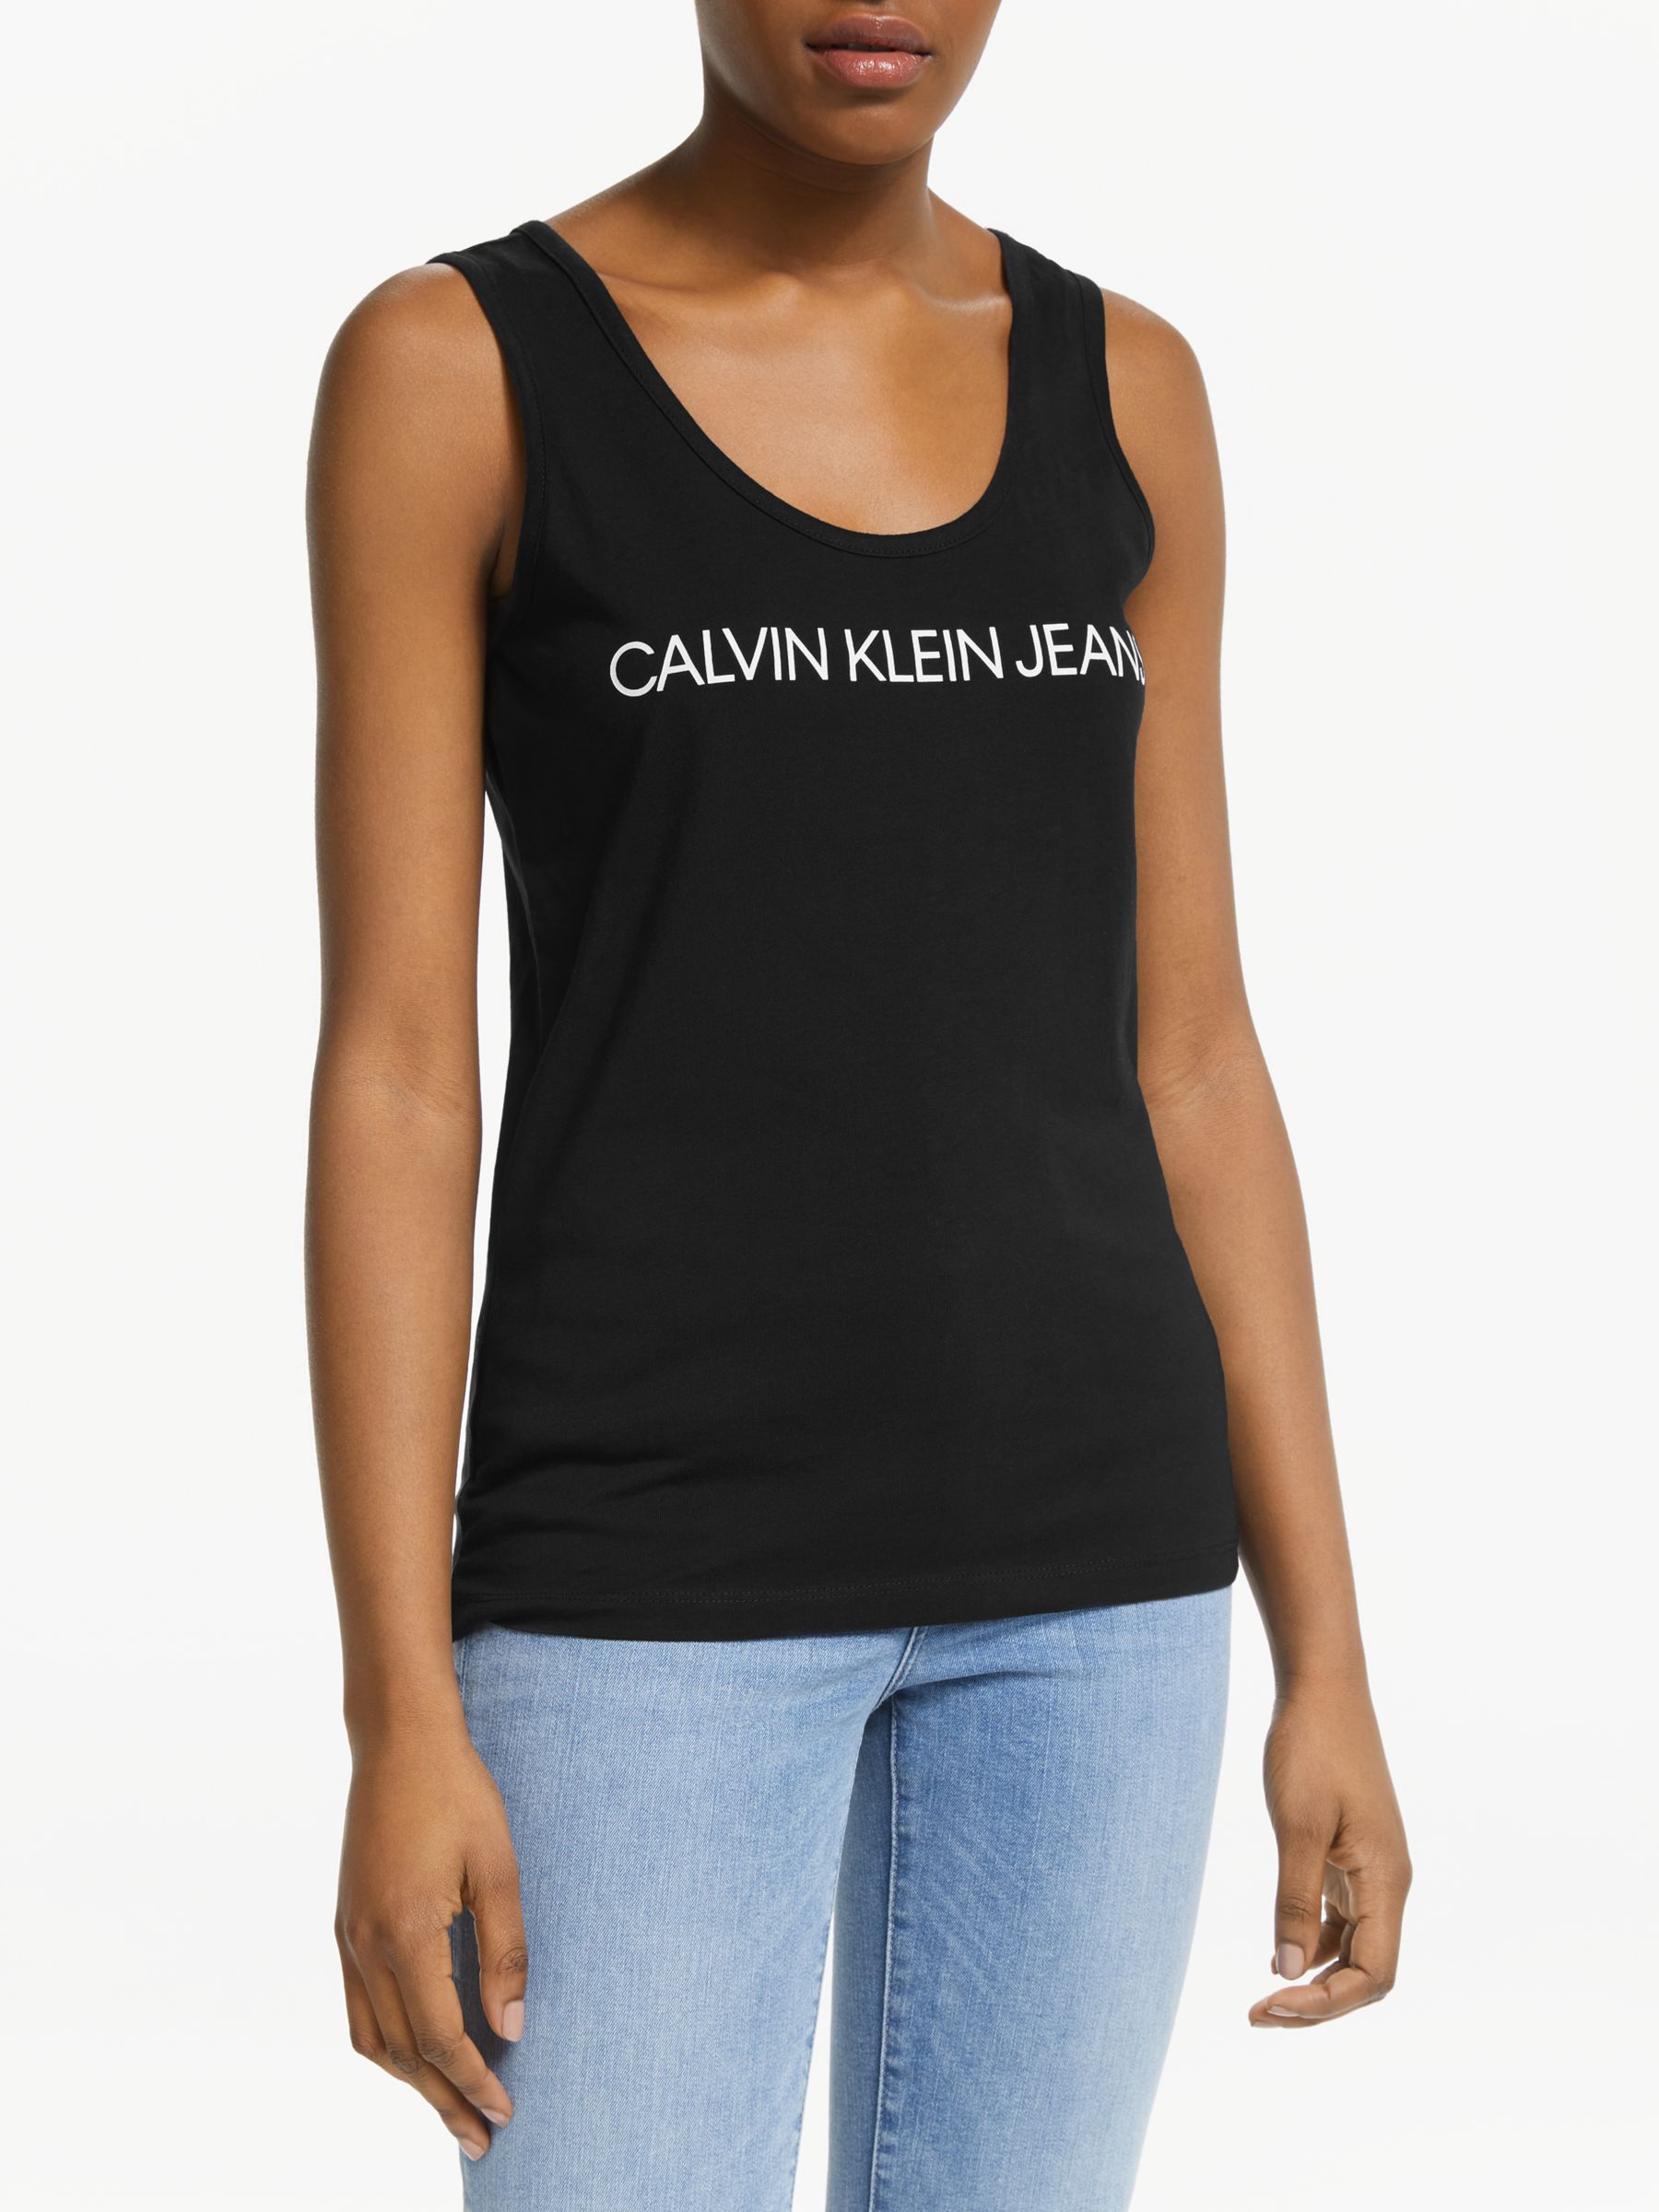 Calvin Klein Jeans Institutional Slim Tank Top, CK Black